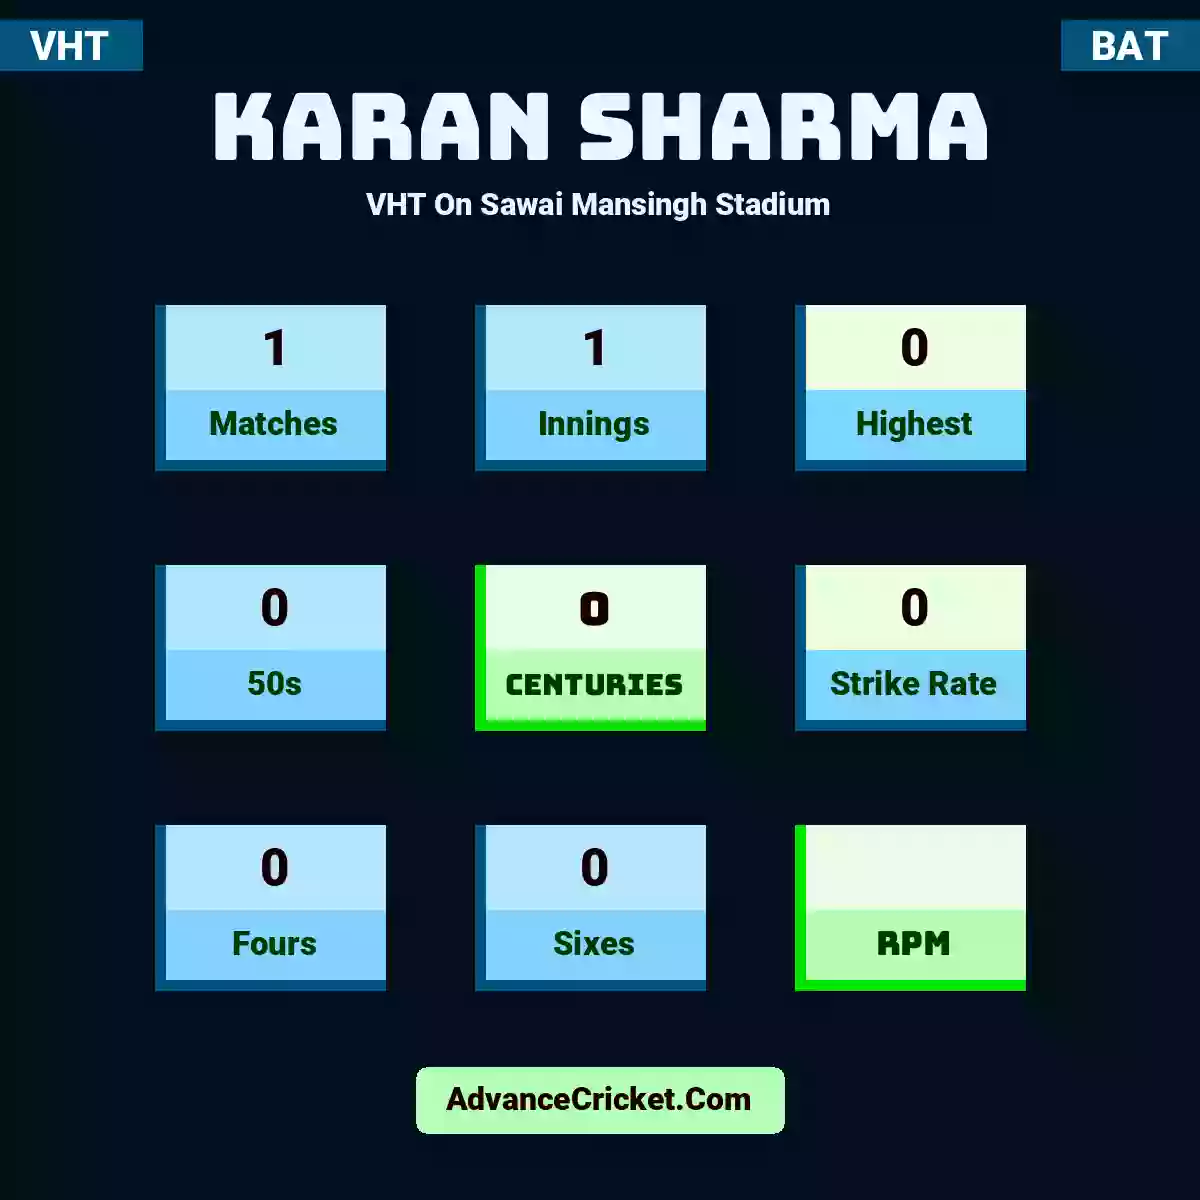 Karan Sharma VHT  On Sawai Mansingh Stadium, Karan Sharma played 1 matches, scored 0 runs as highest, 0 half-centuries, and 0 centuries, with a strike rate of 0. K.Sharma hit 0 fours and 0 sixes.